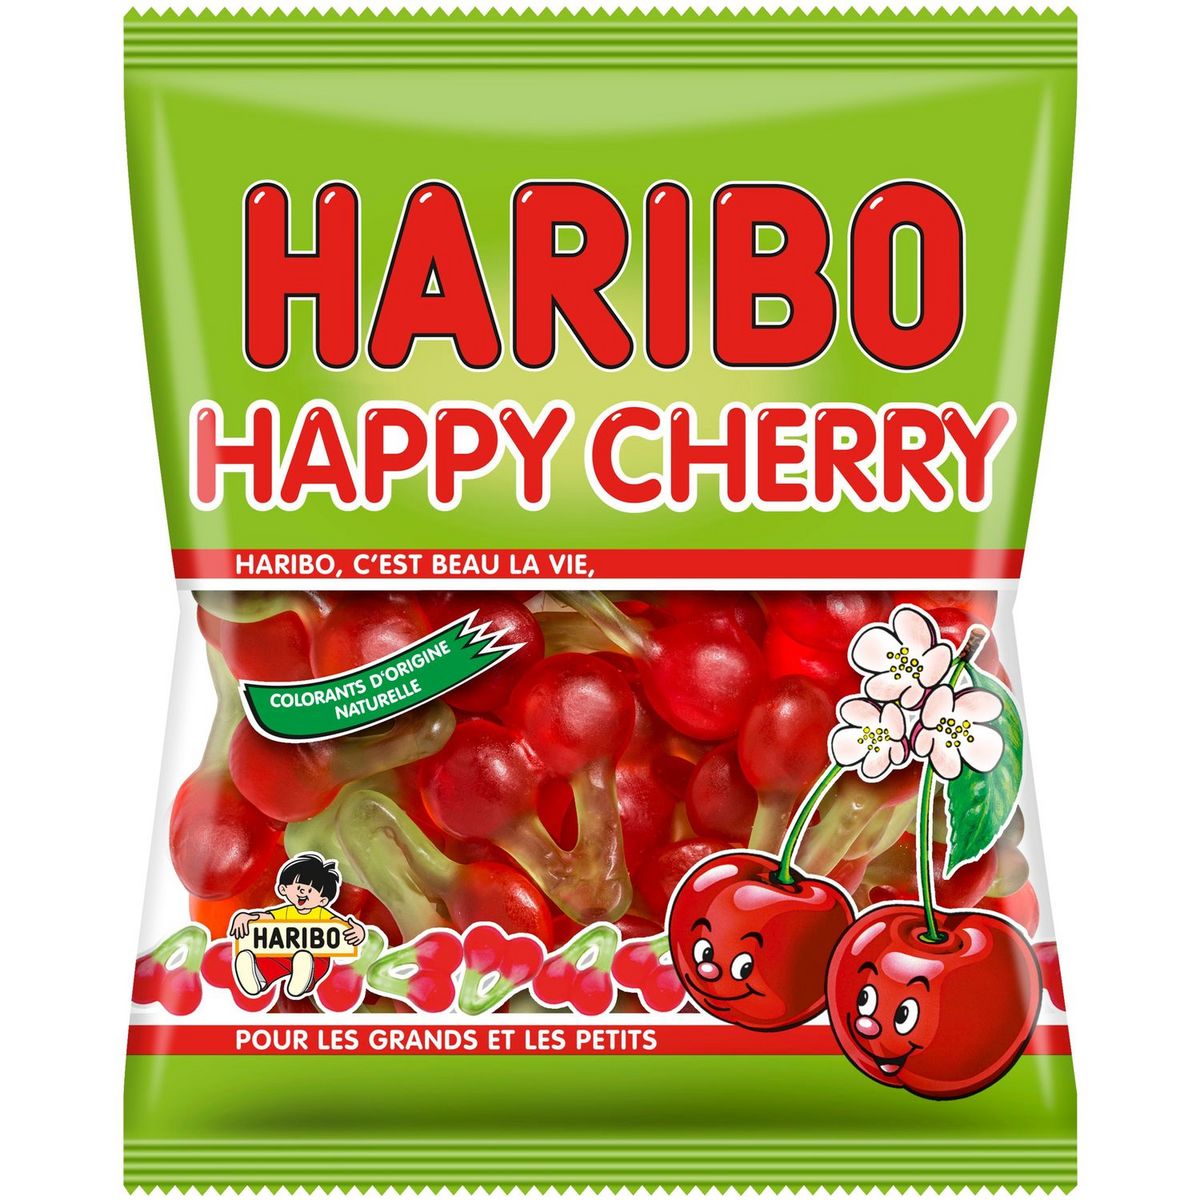 Cerise HAPPY CHERRY, happy cherry Haribo, Cerise bonbon haribo